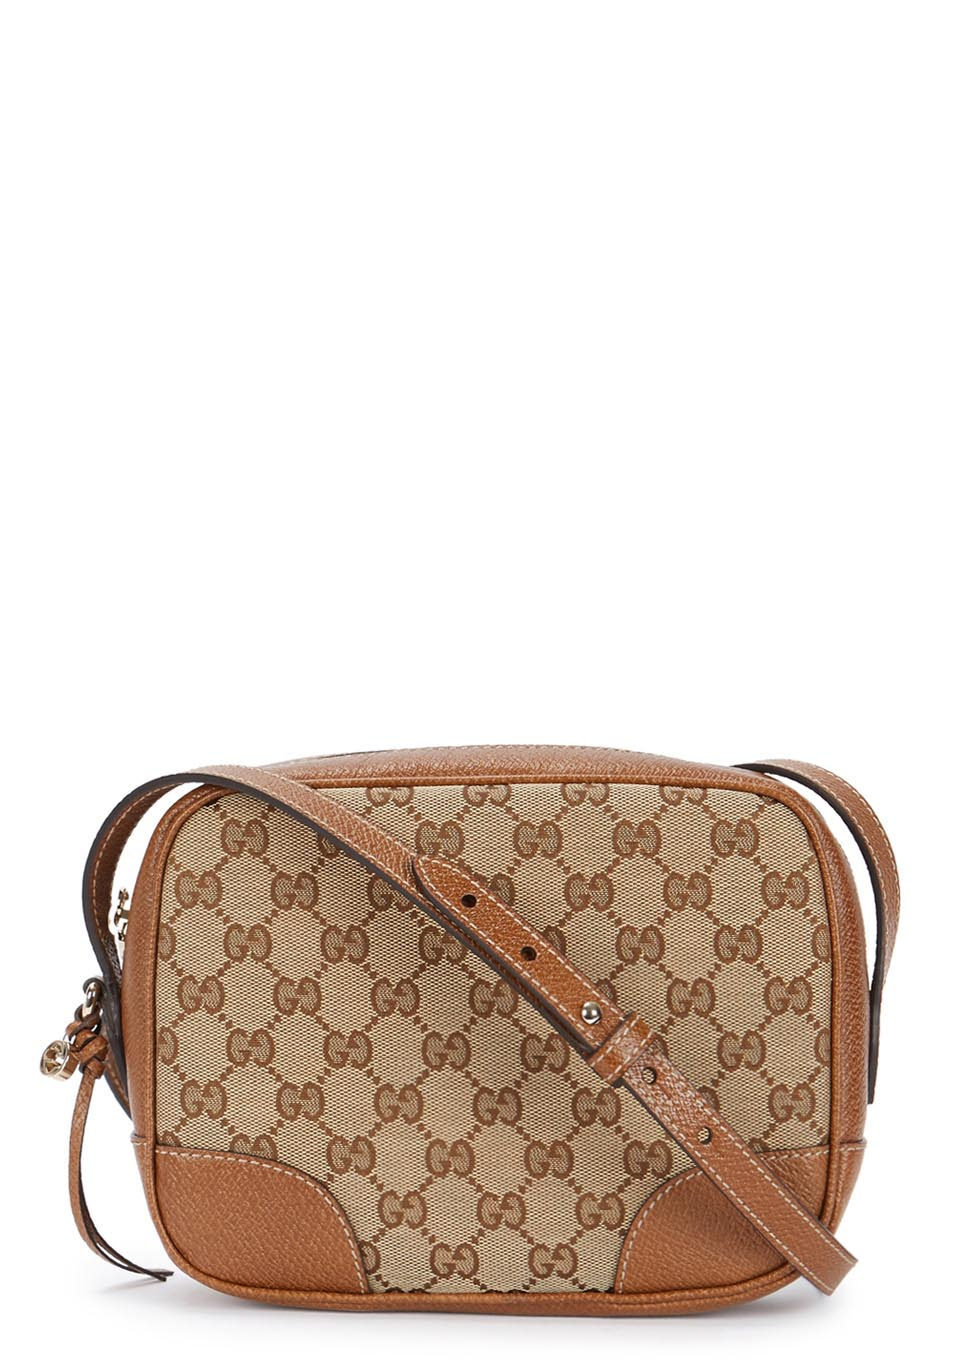 Gucci Bree Monogrammed Oak Leather Cross-body Bag in Tan (Brown) - Lyst